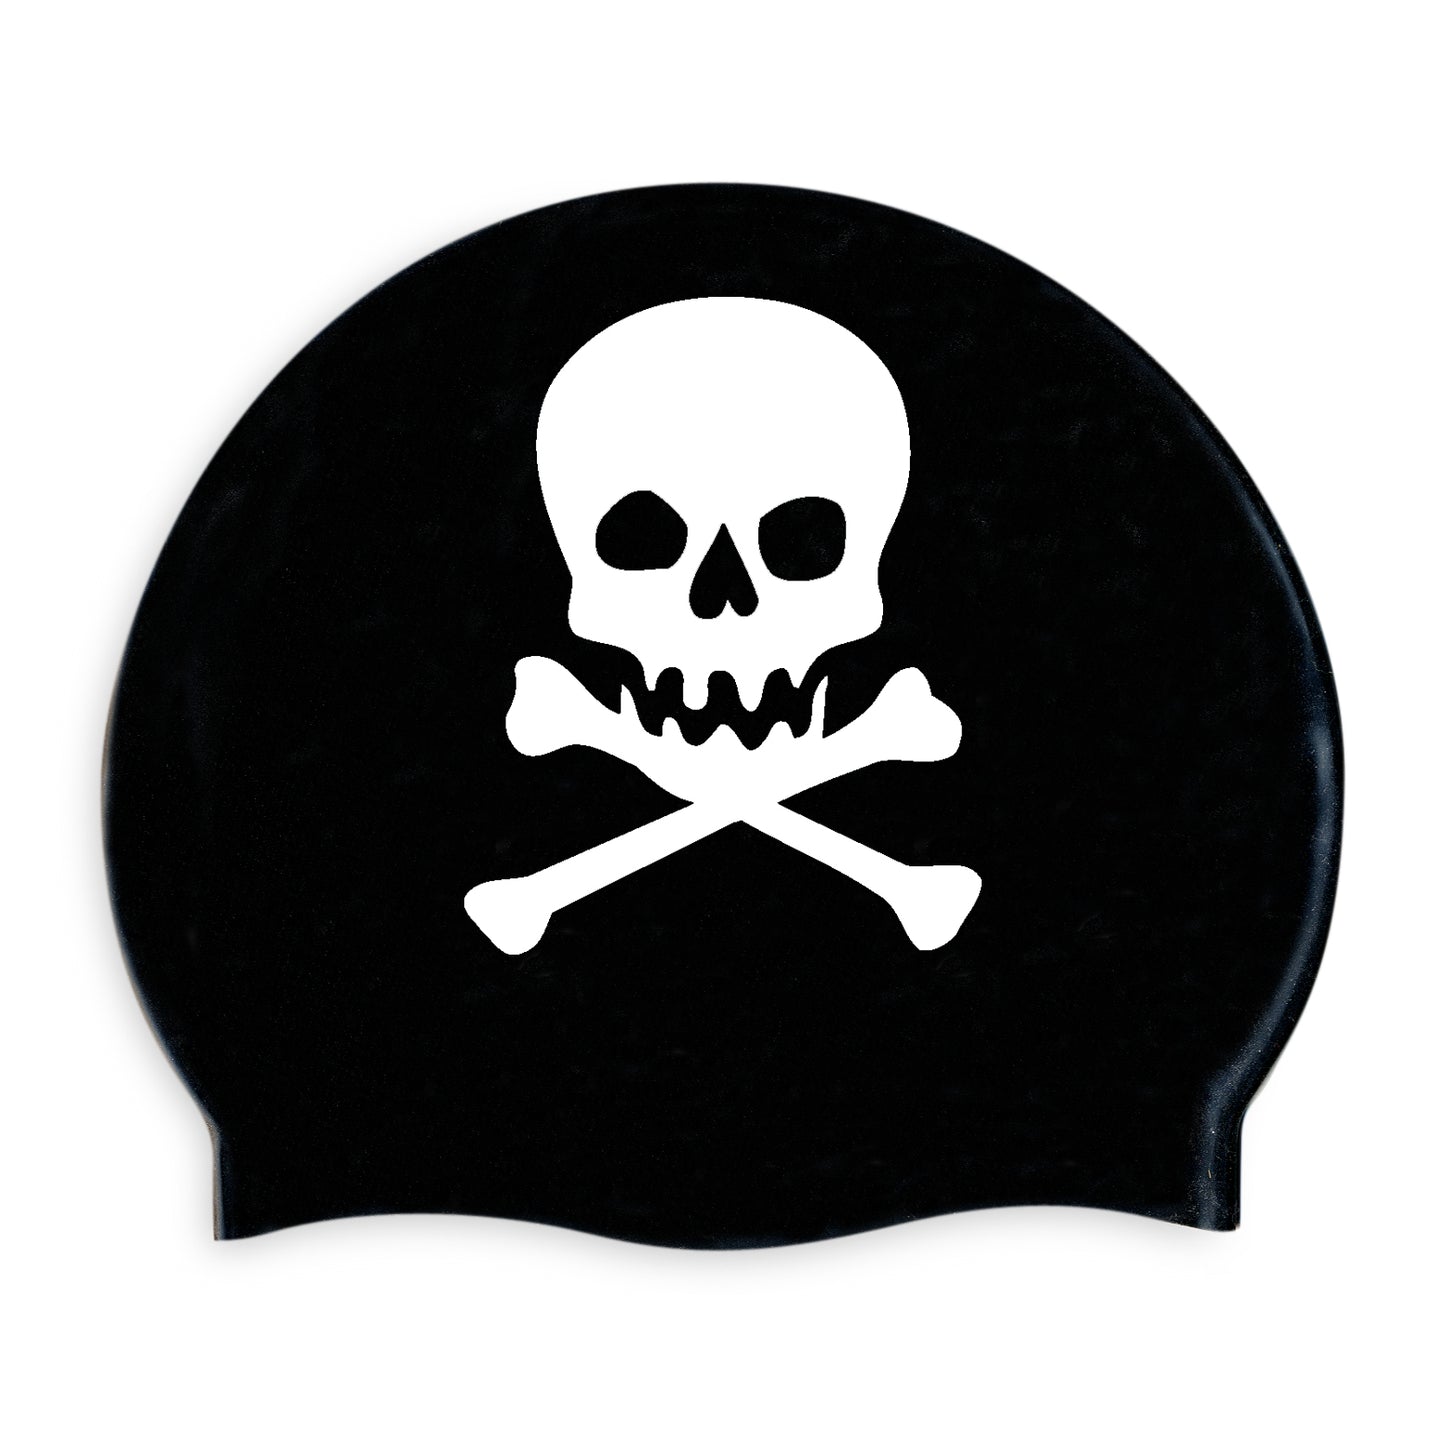 Skull & Cross Bones Swimming Cap